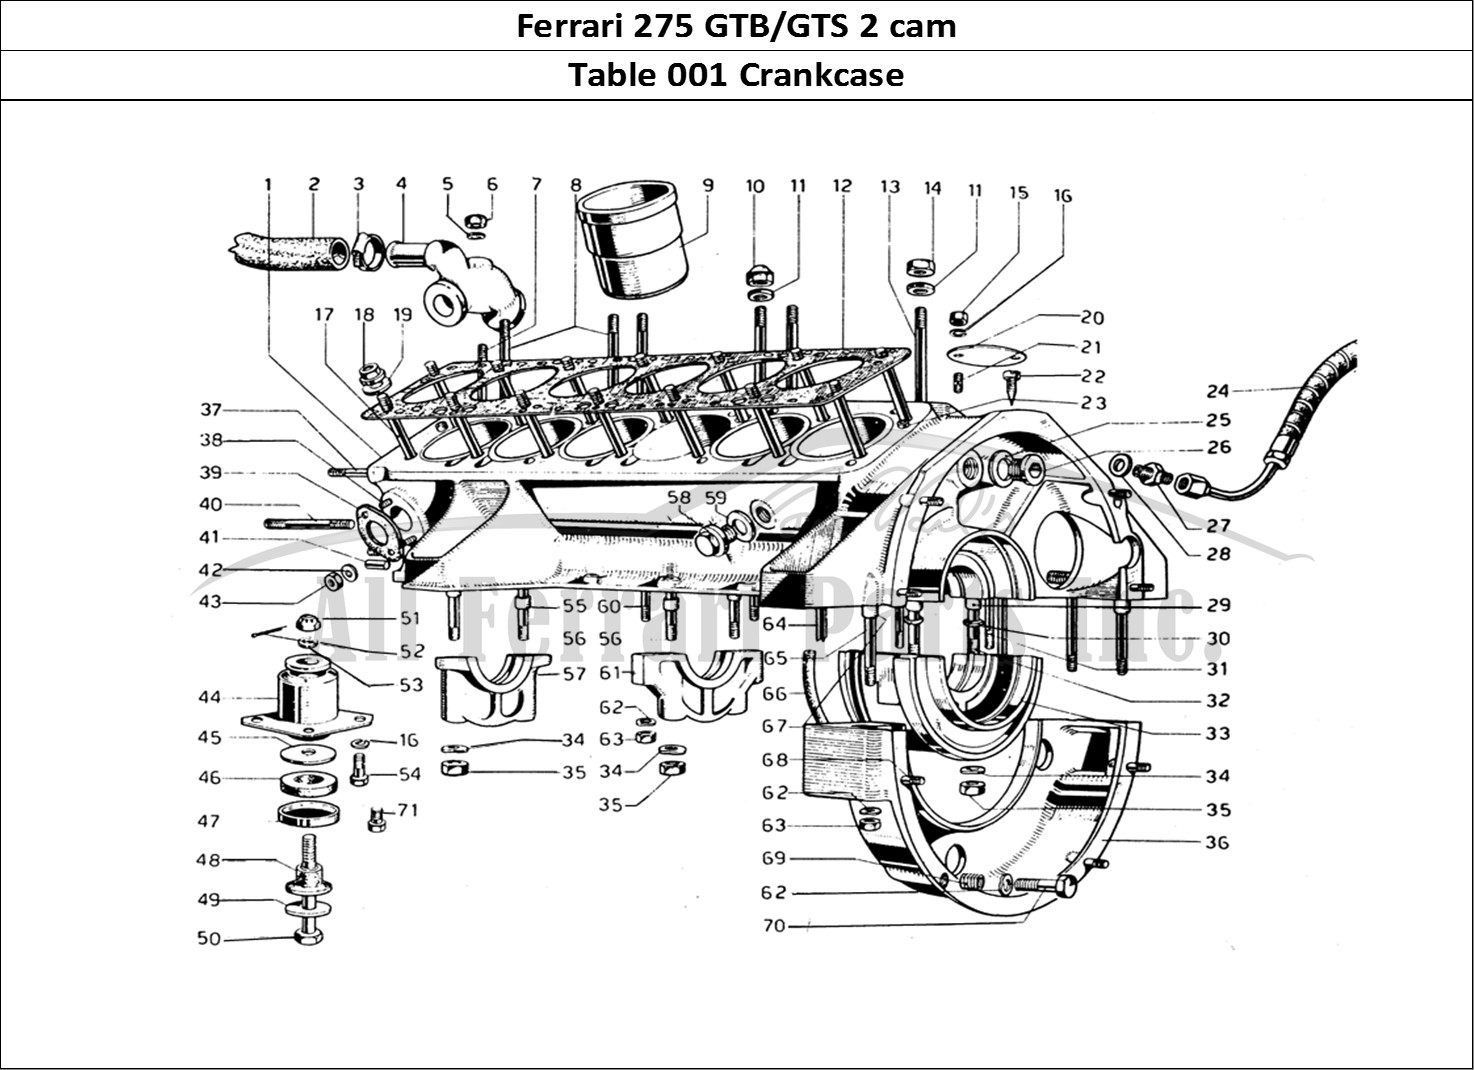 Ferrari Parts Ferrari 275 GTB/GTS 2 cam Page 001 Crankcase